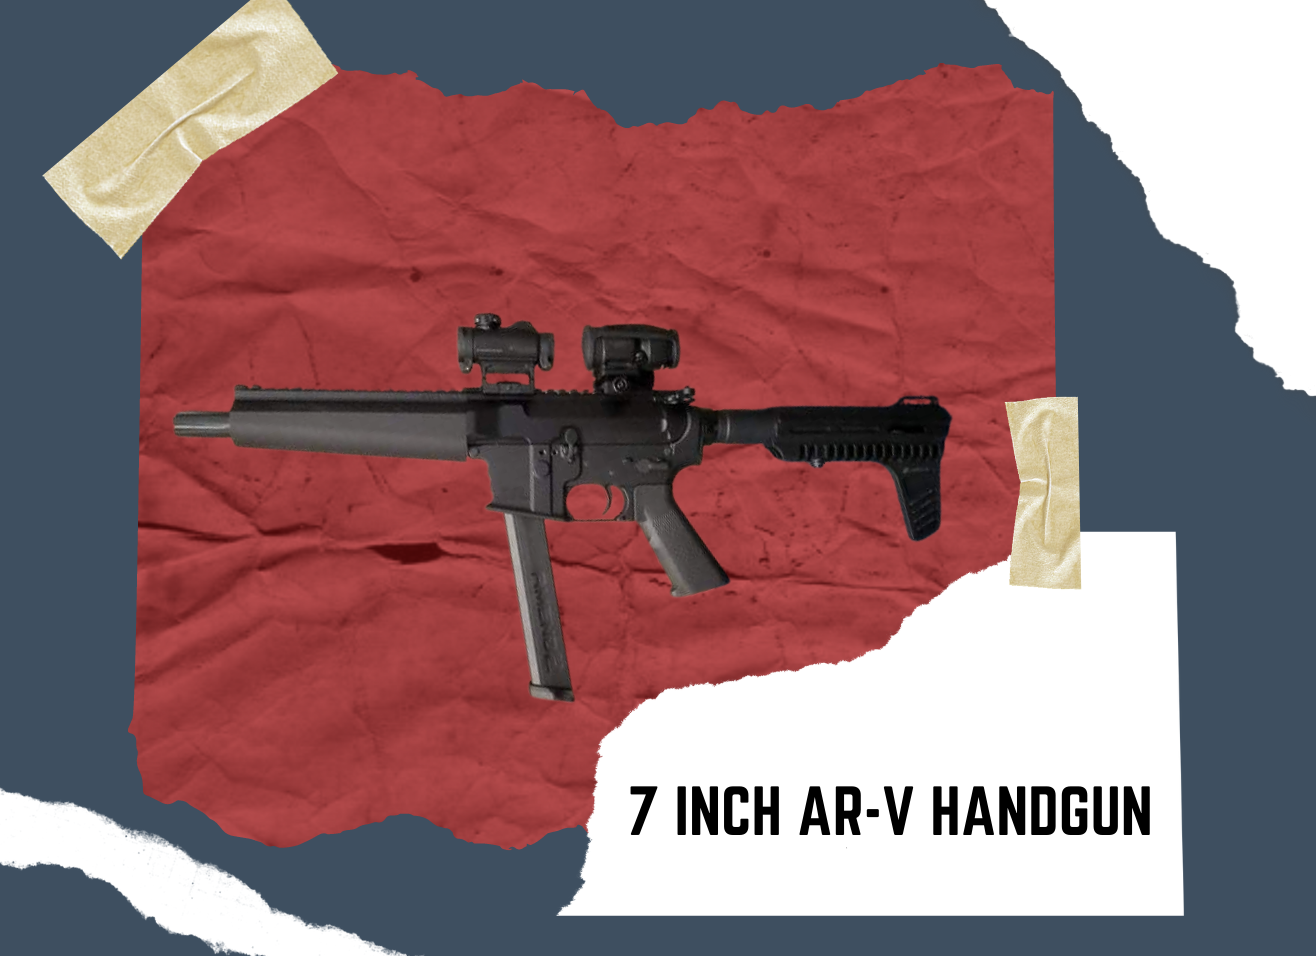 7 inch AR-V handgun